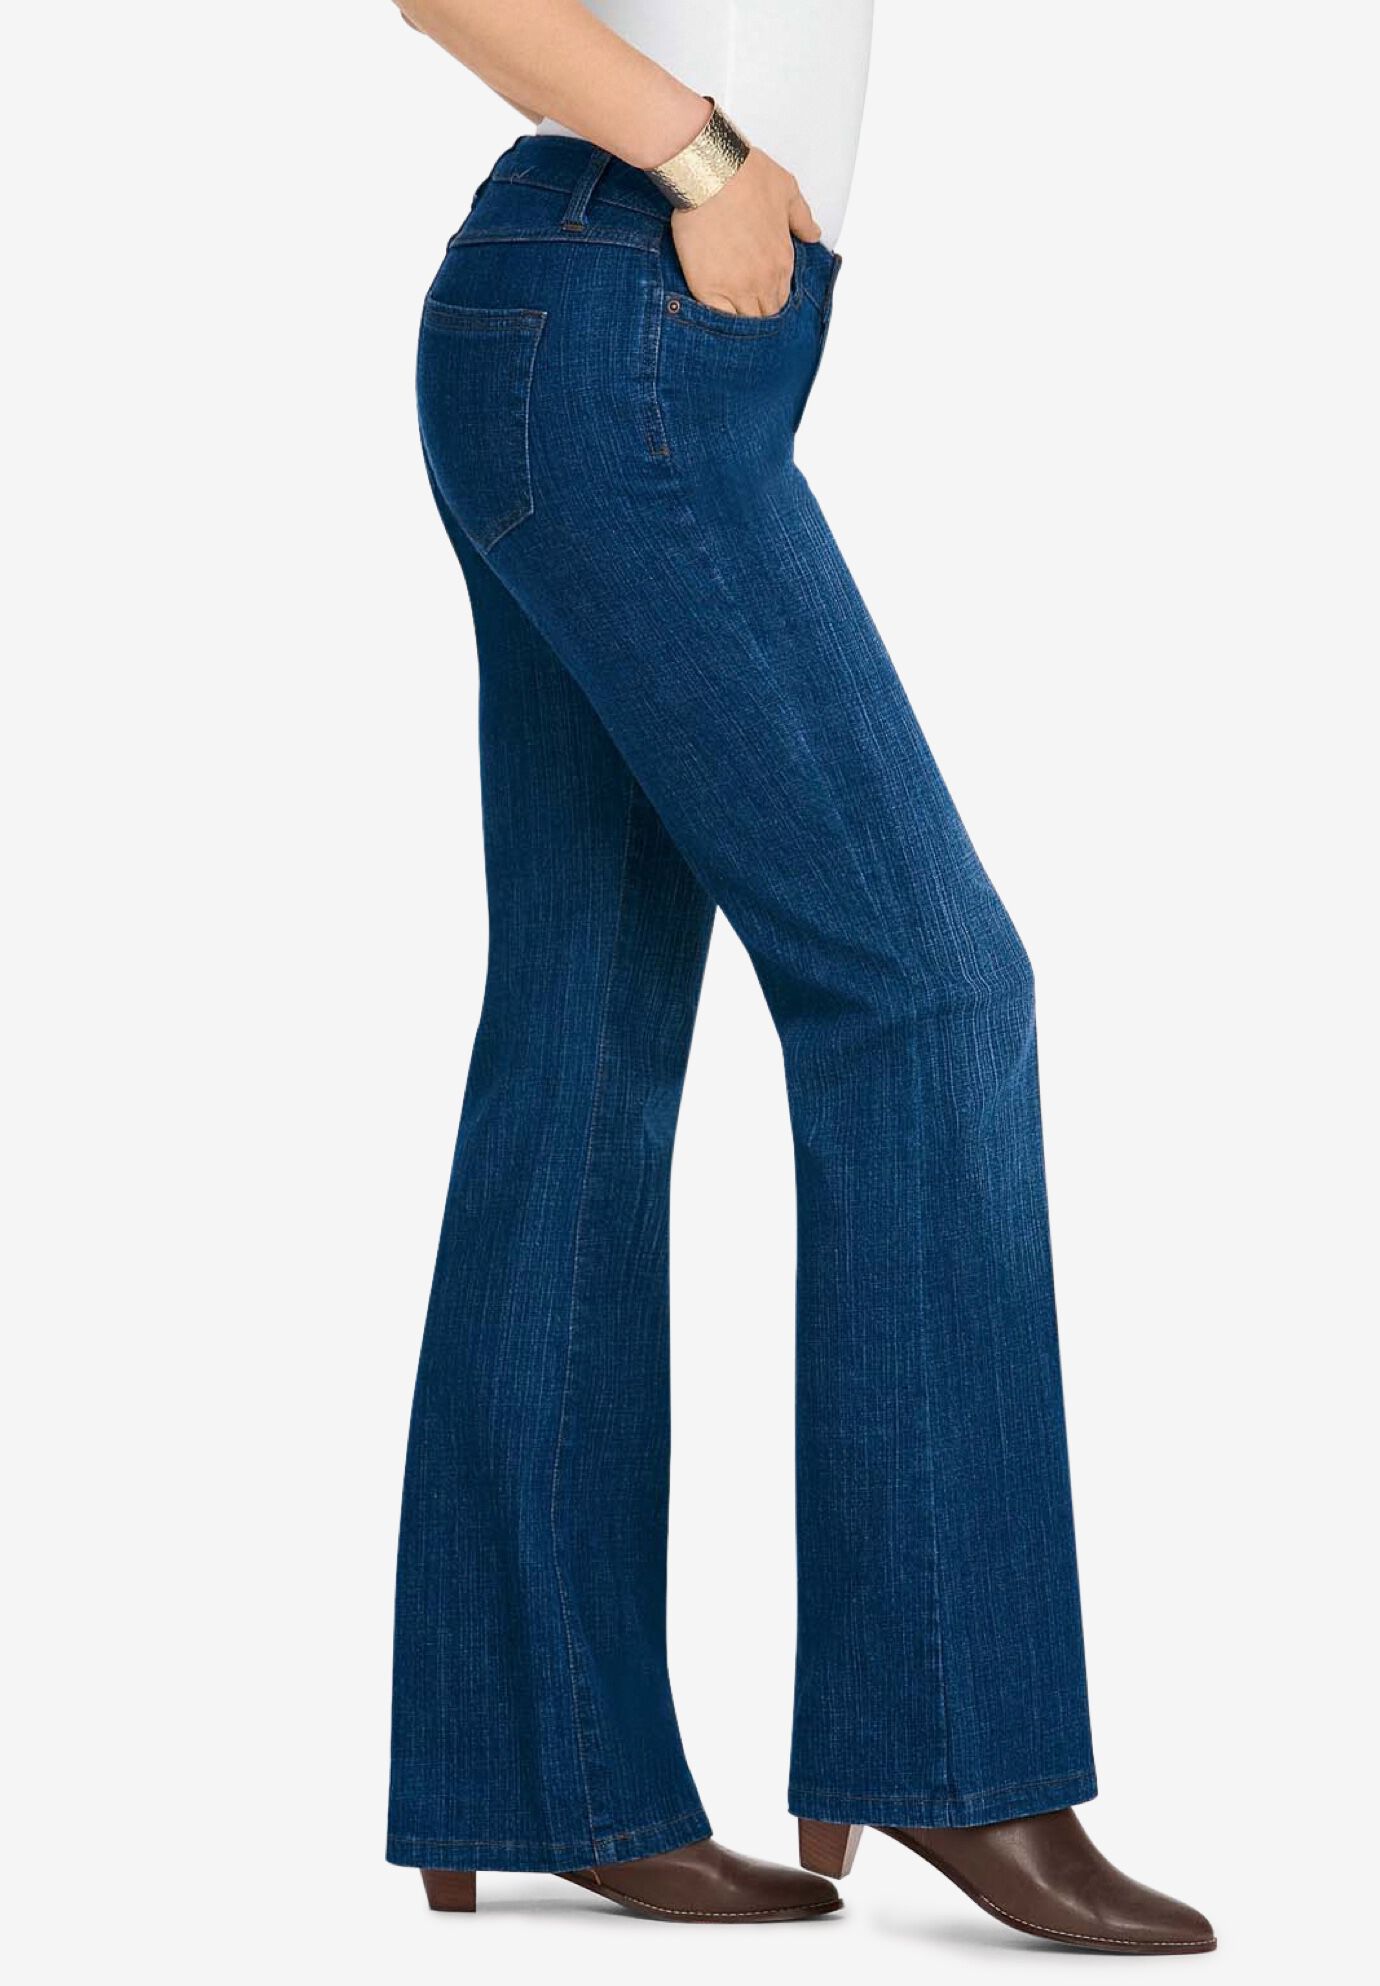 roamans stretch jeans